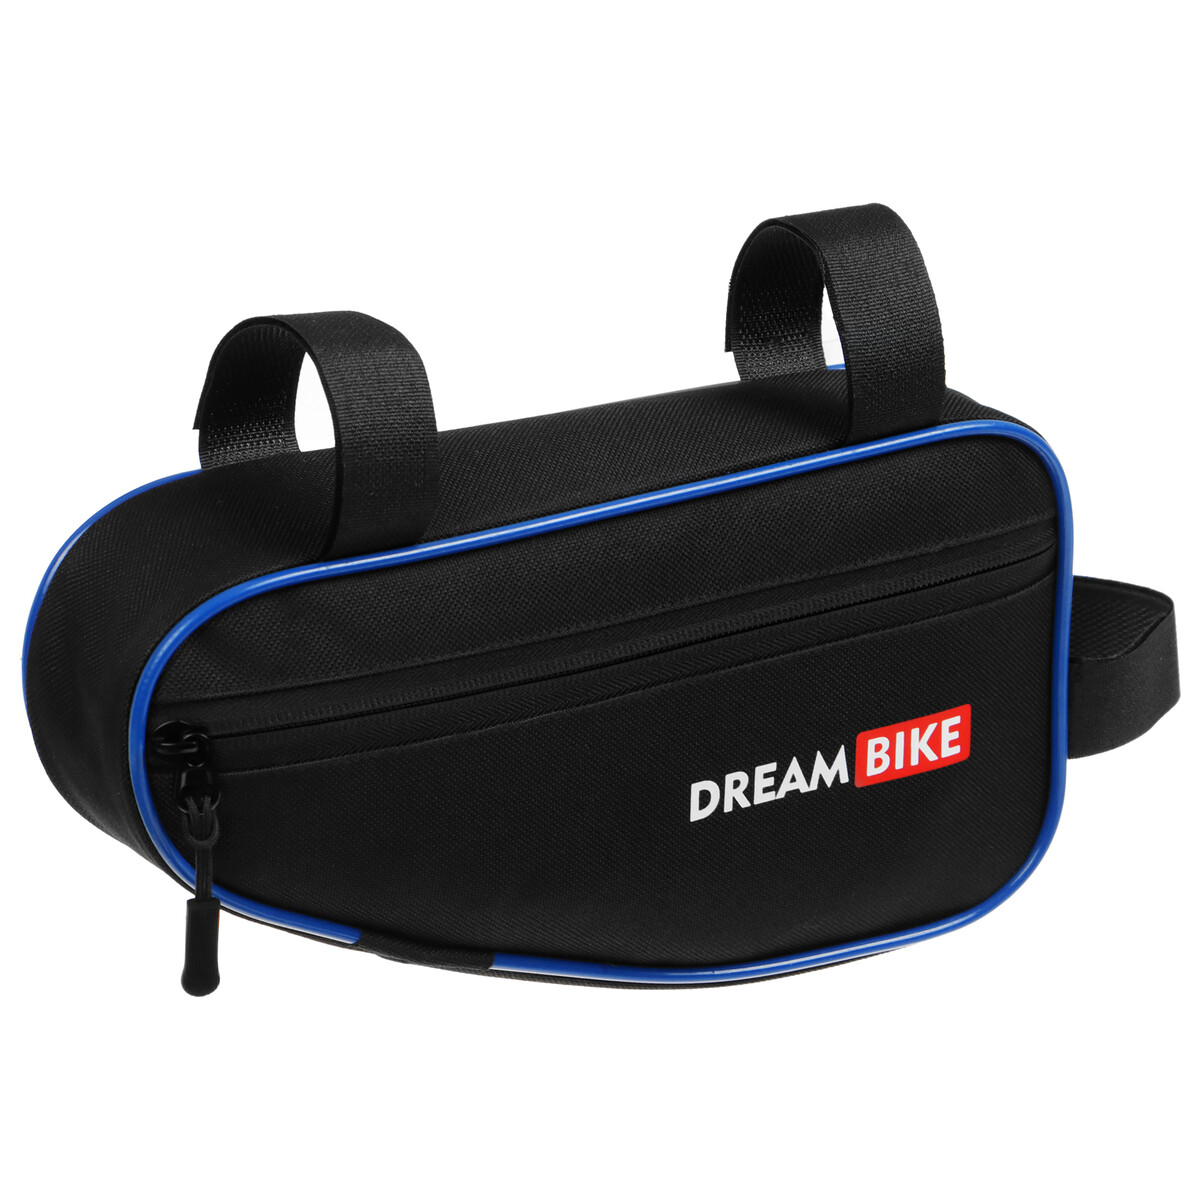 Велосумка dream bike под раму, 26х13.5х5, цвет черный/синий cube велосумка на раму rfr top tube bag 14046